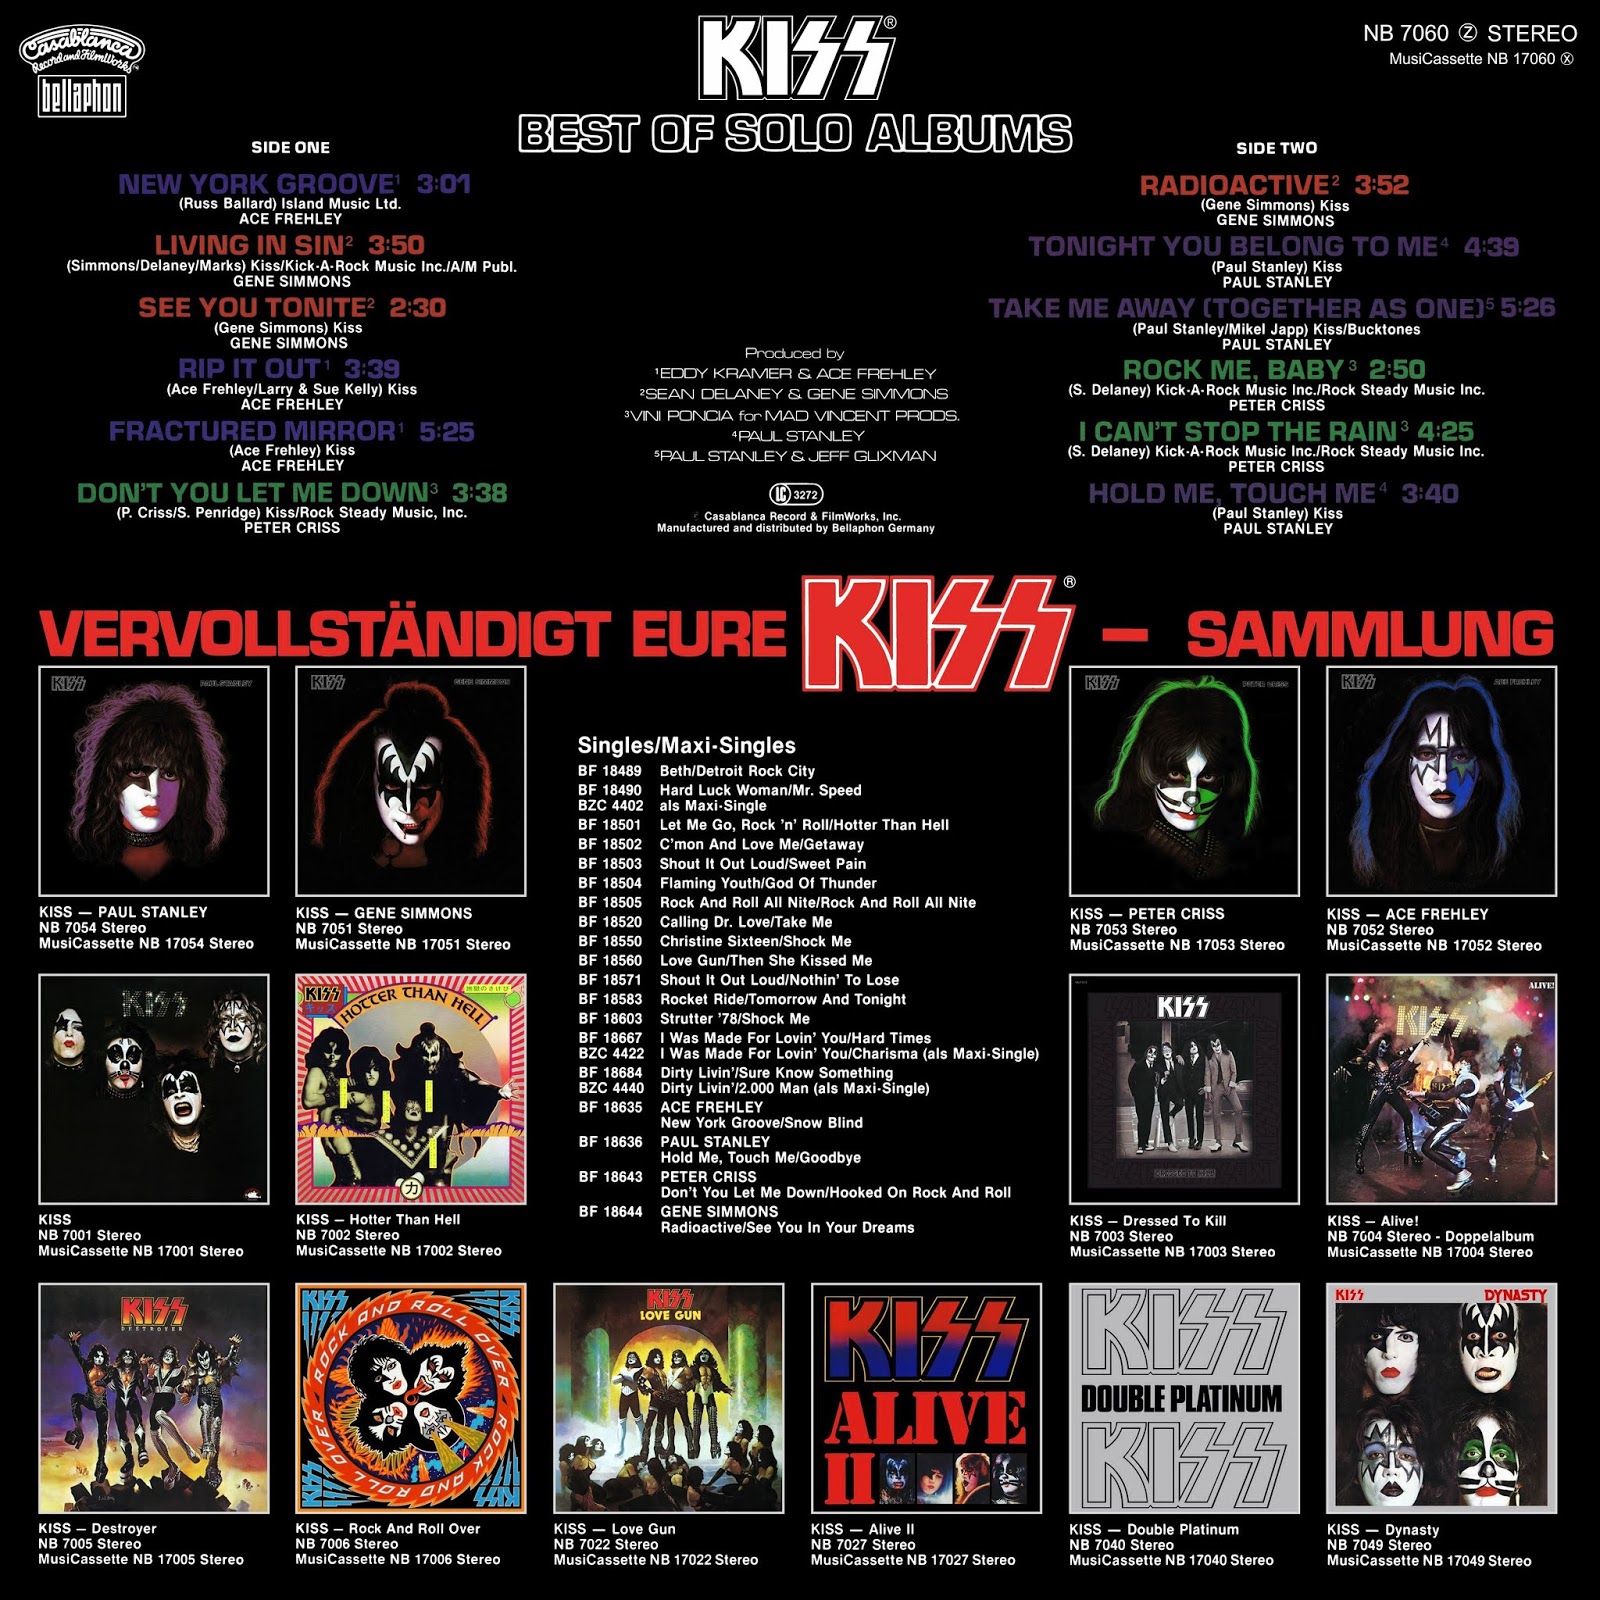 Kiss the best. Kiss - best of solo albums Джин Симмонс. Kiss solo albums 1978. Kiss Gene Simmons album. Kiss Paul Stanley 1978 обложка.